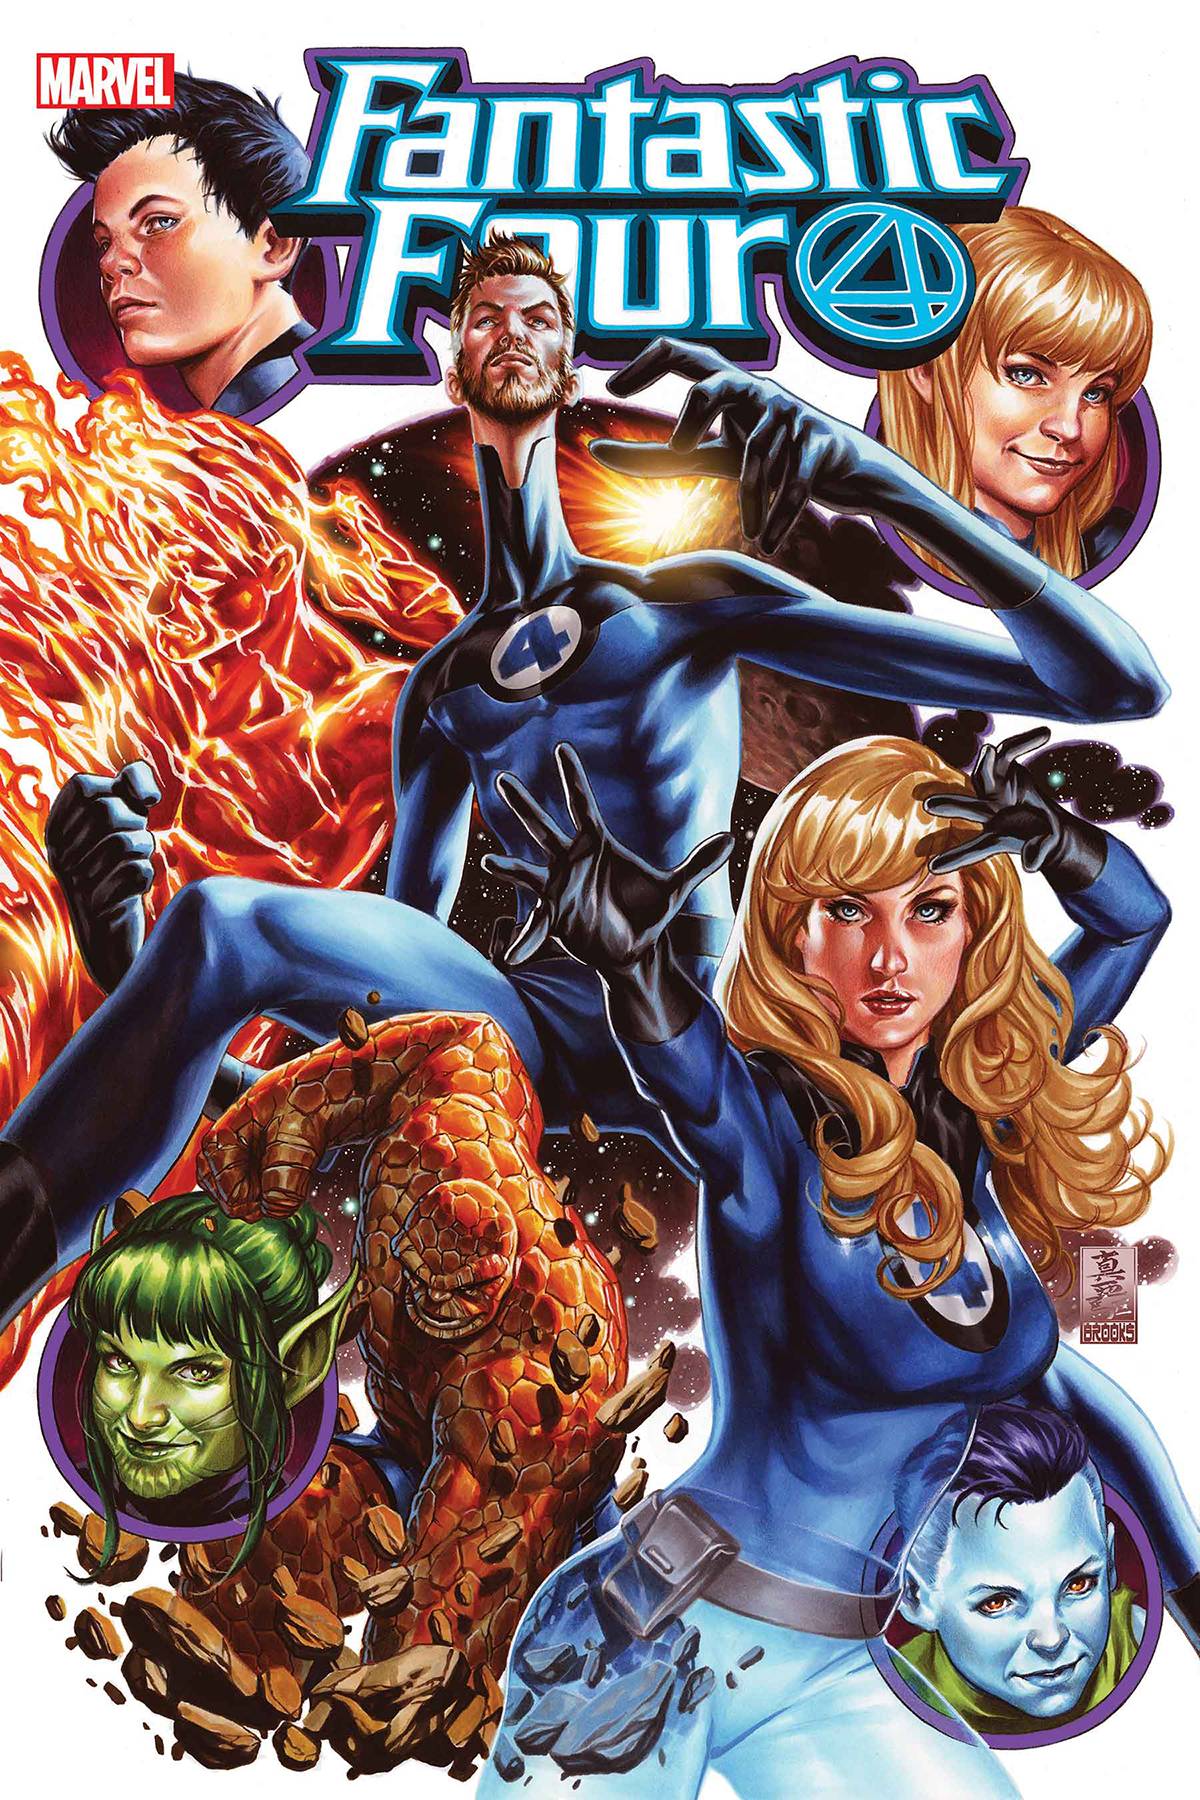 Fantastic Four #25 - State of Comics